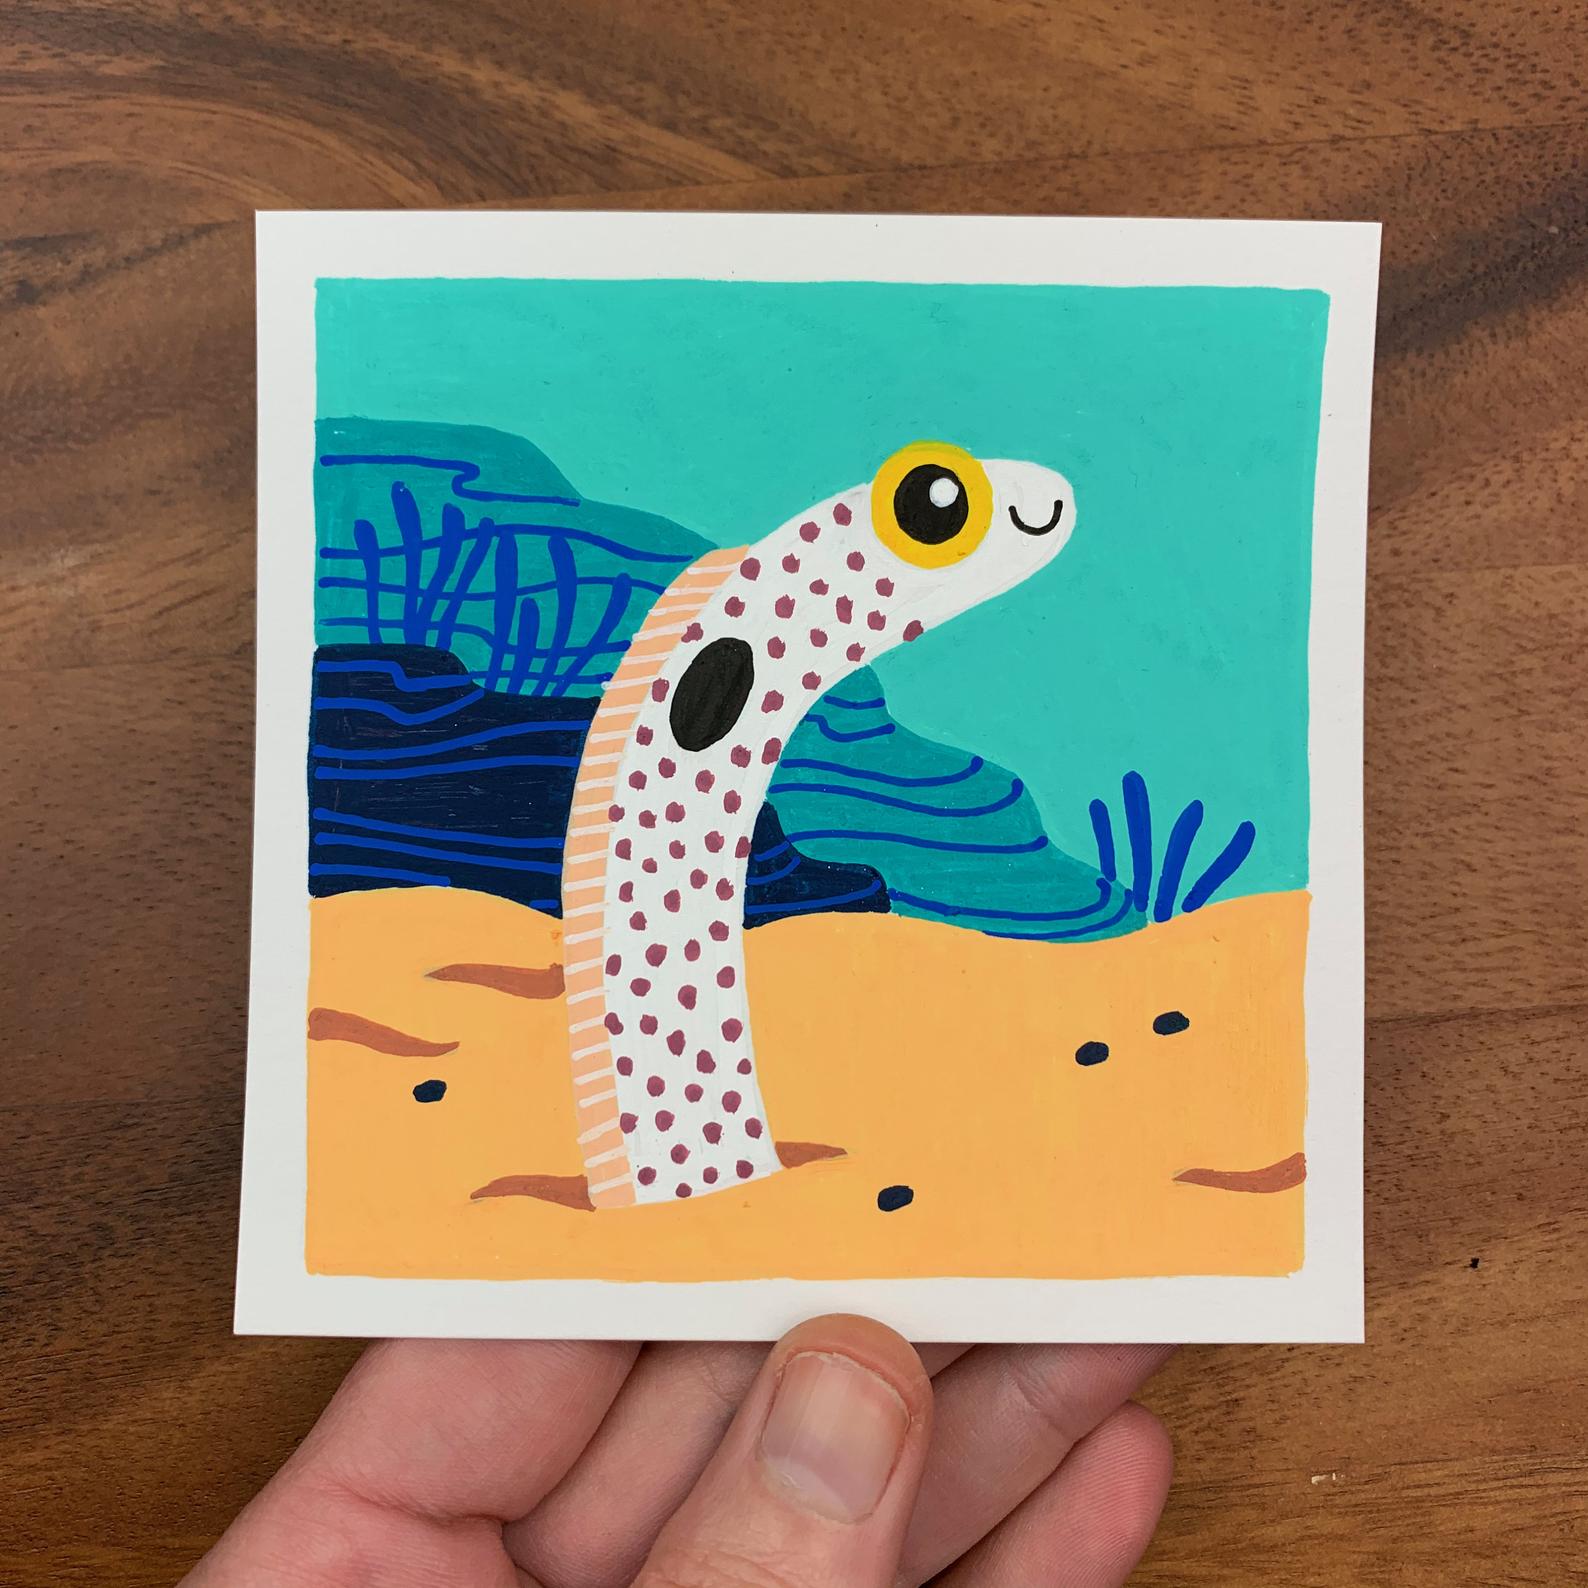 Original artwork of a cute garden eel peeking out of the sandy ocean floor. Materials used: Uni-Posca paint markers.